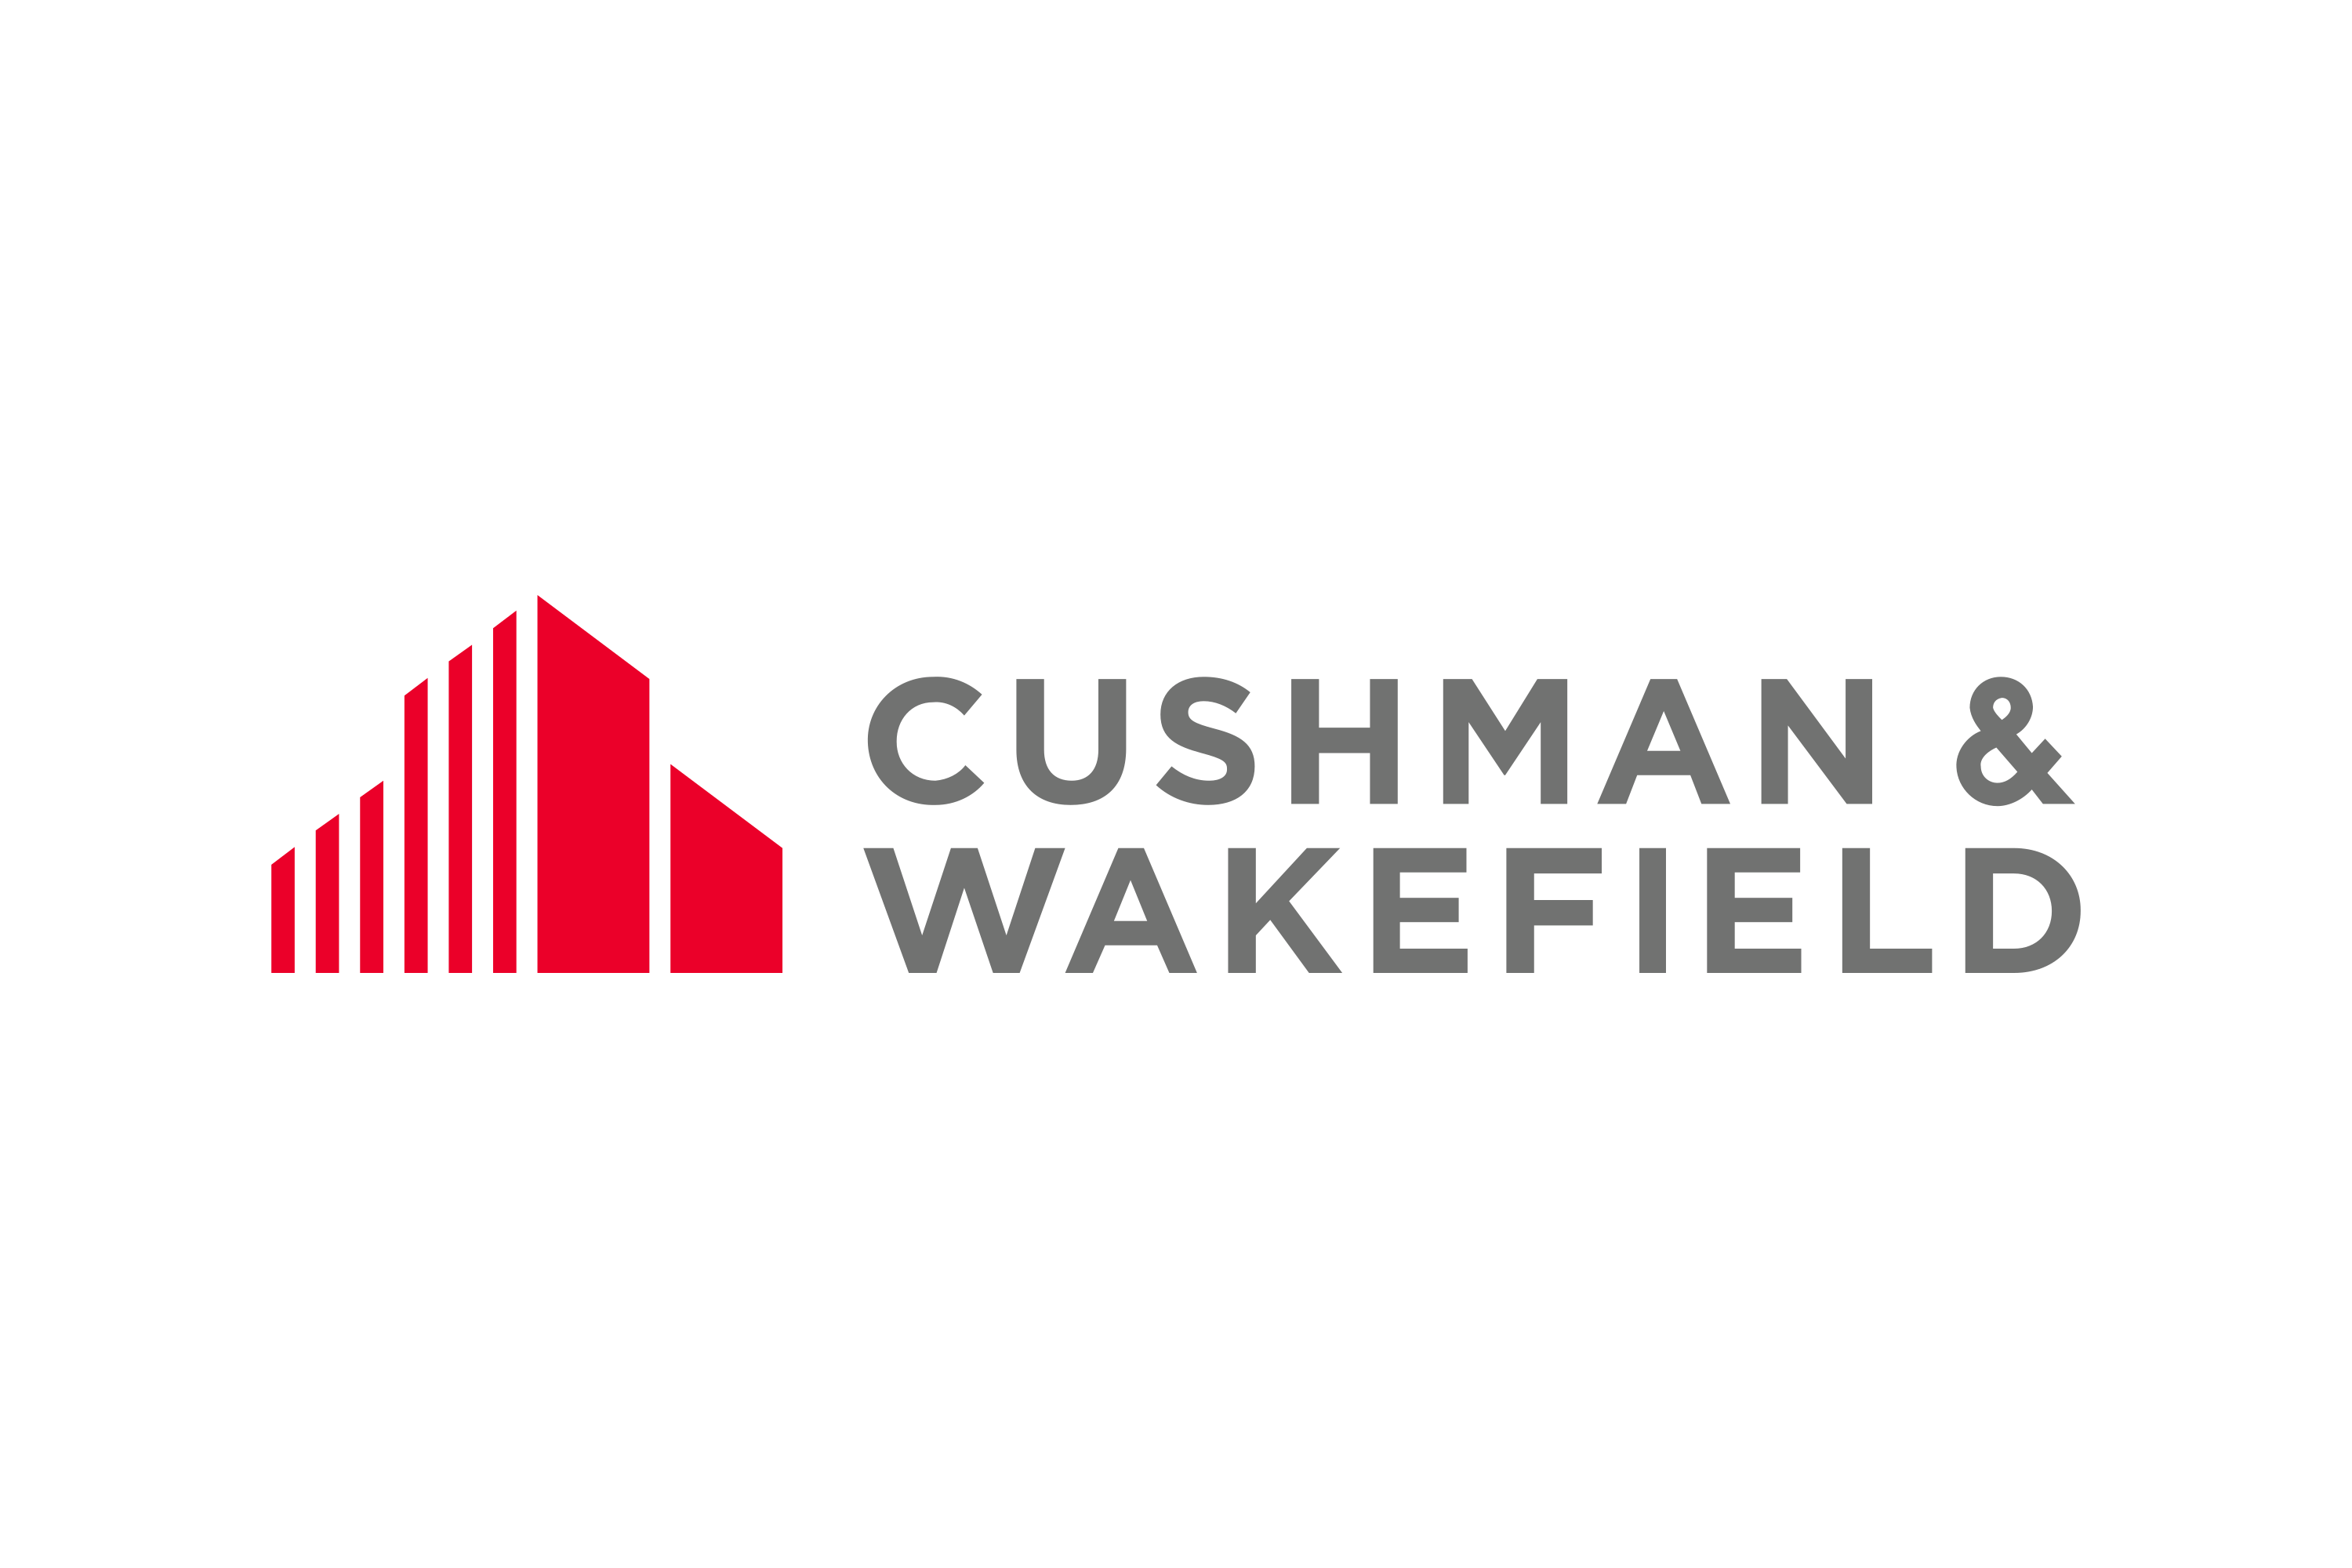 LOGO of CUSHMAN & WAKEFIELD